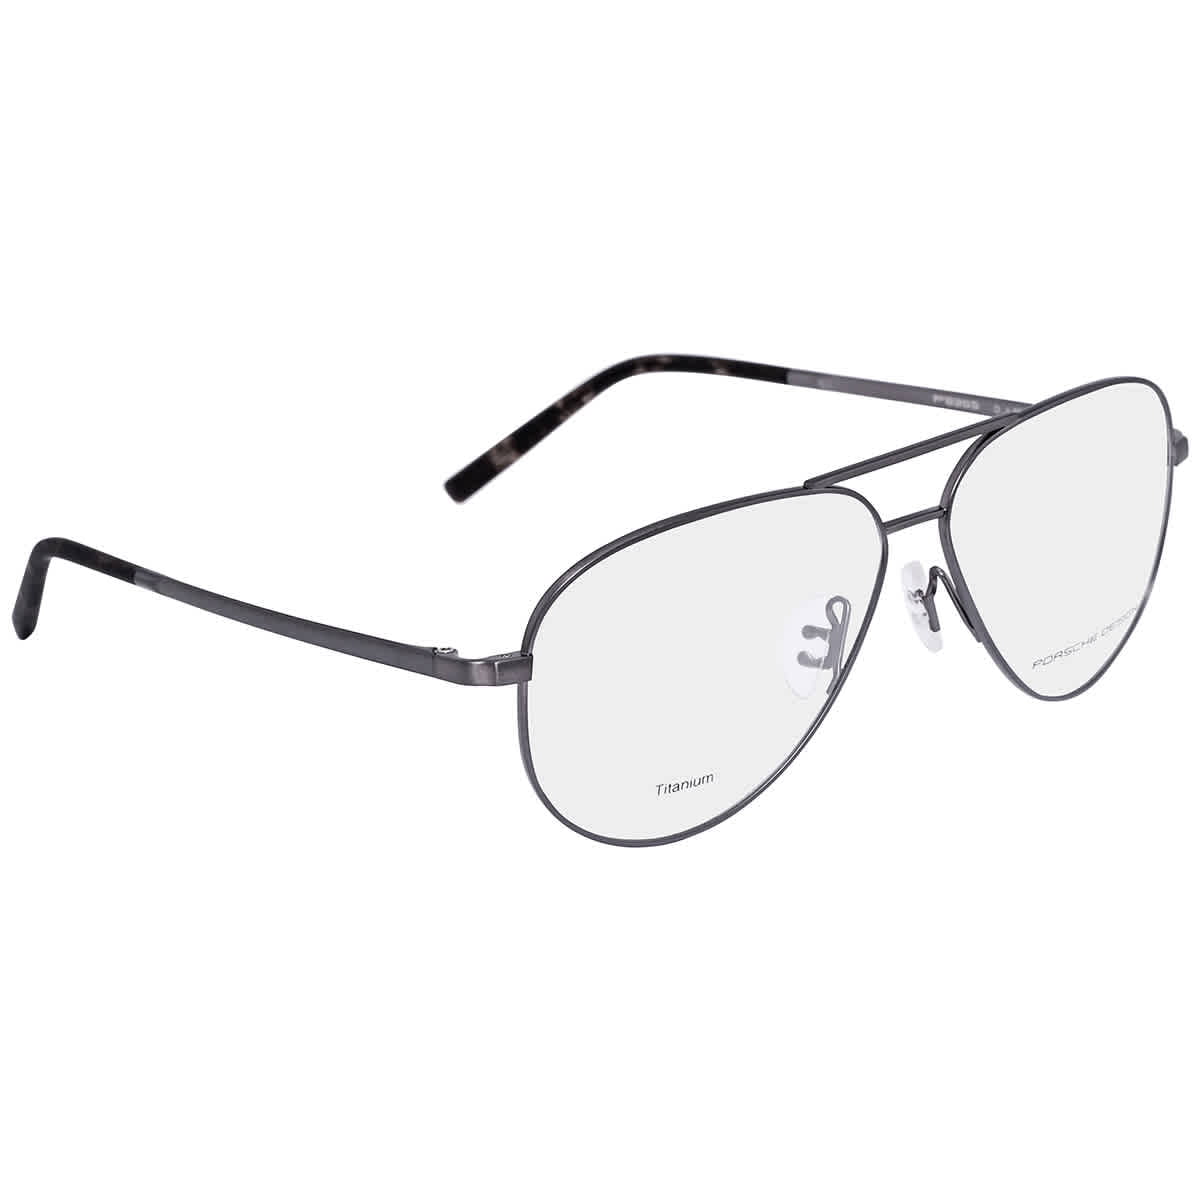 Porsche Design Eyeglasses Titanium Factory Sale | website.jkuat.ac.ke